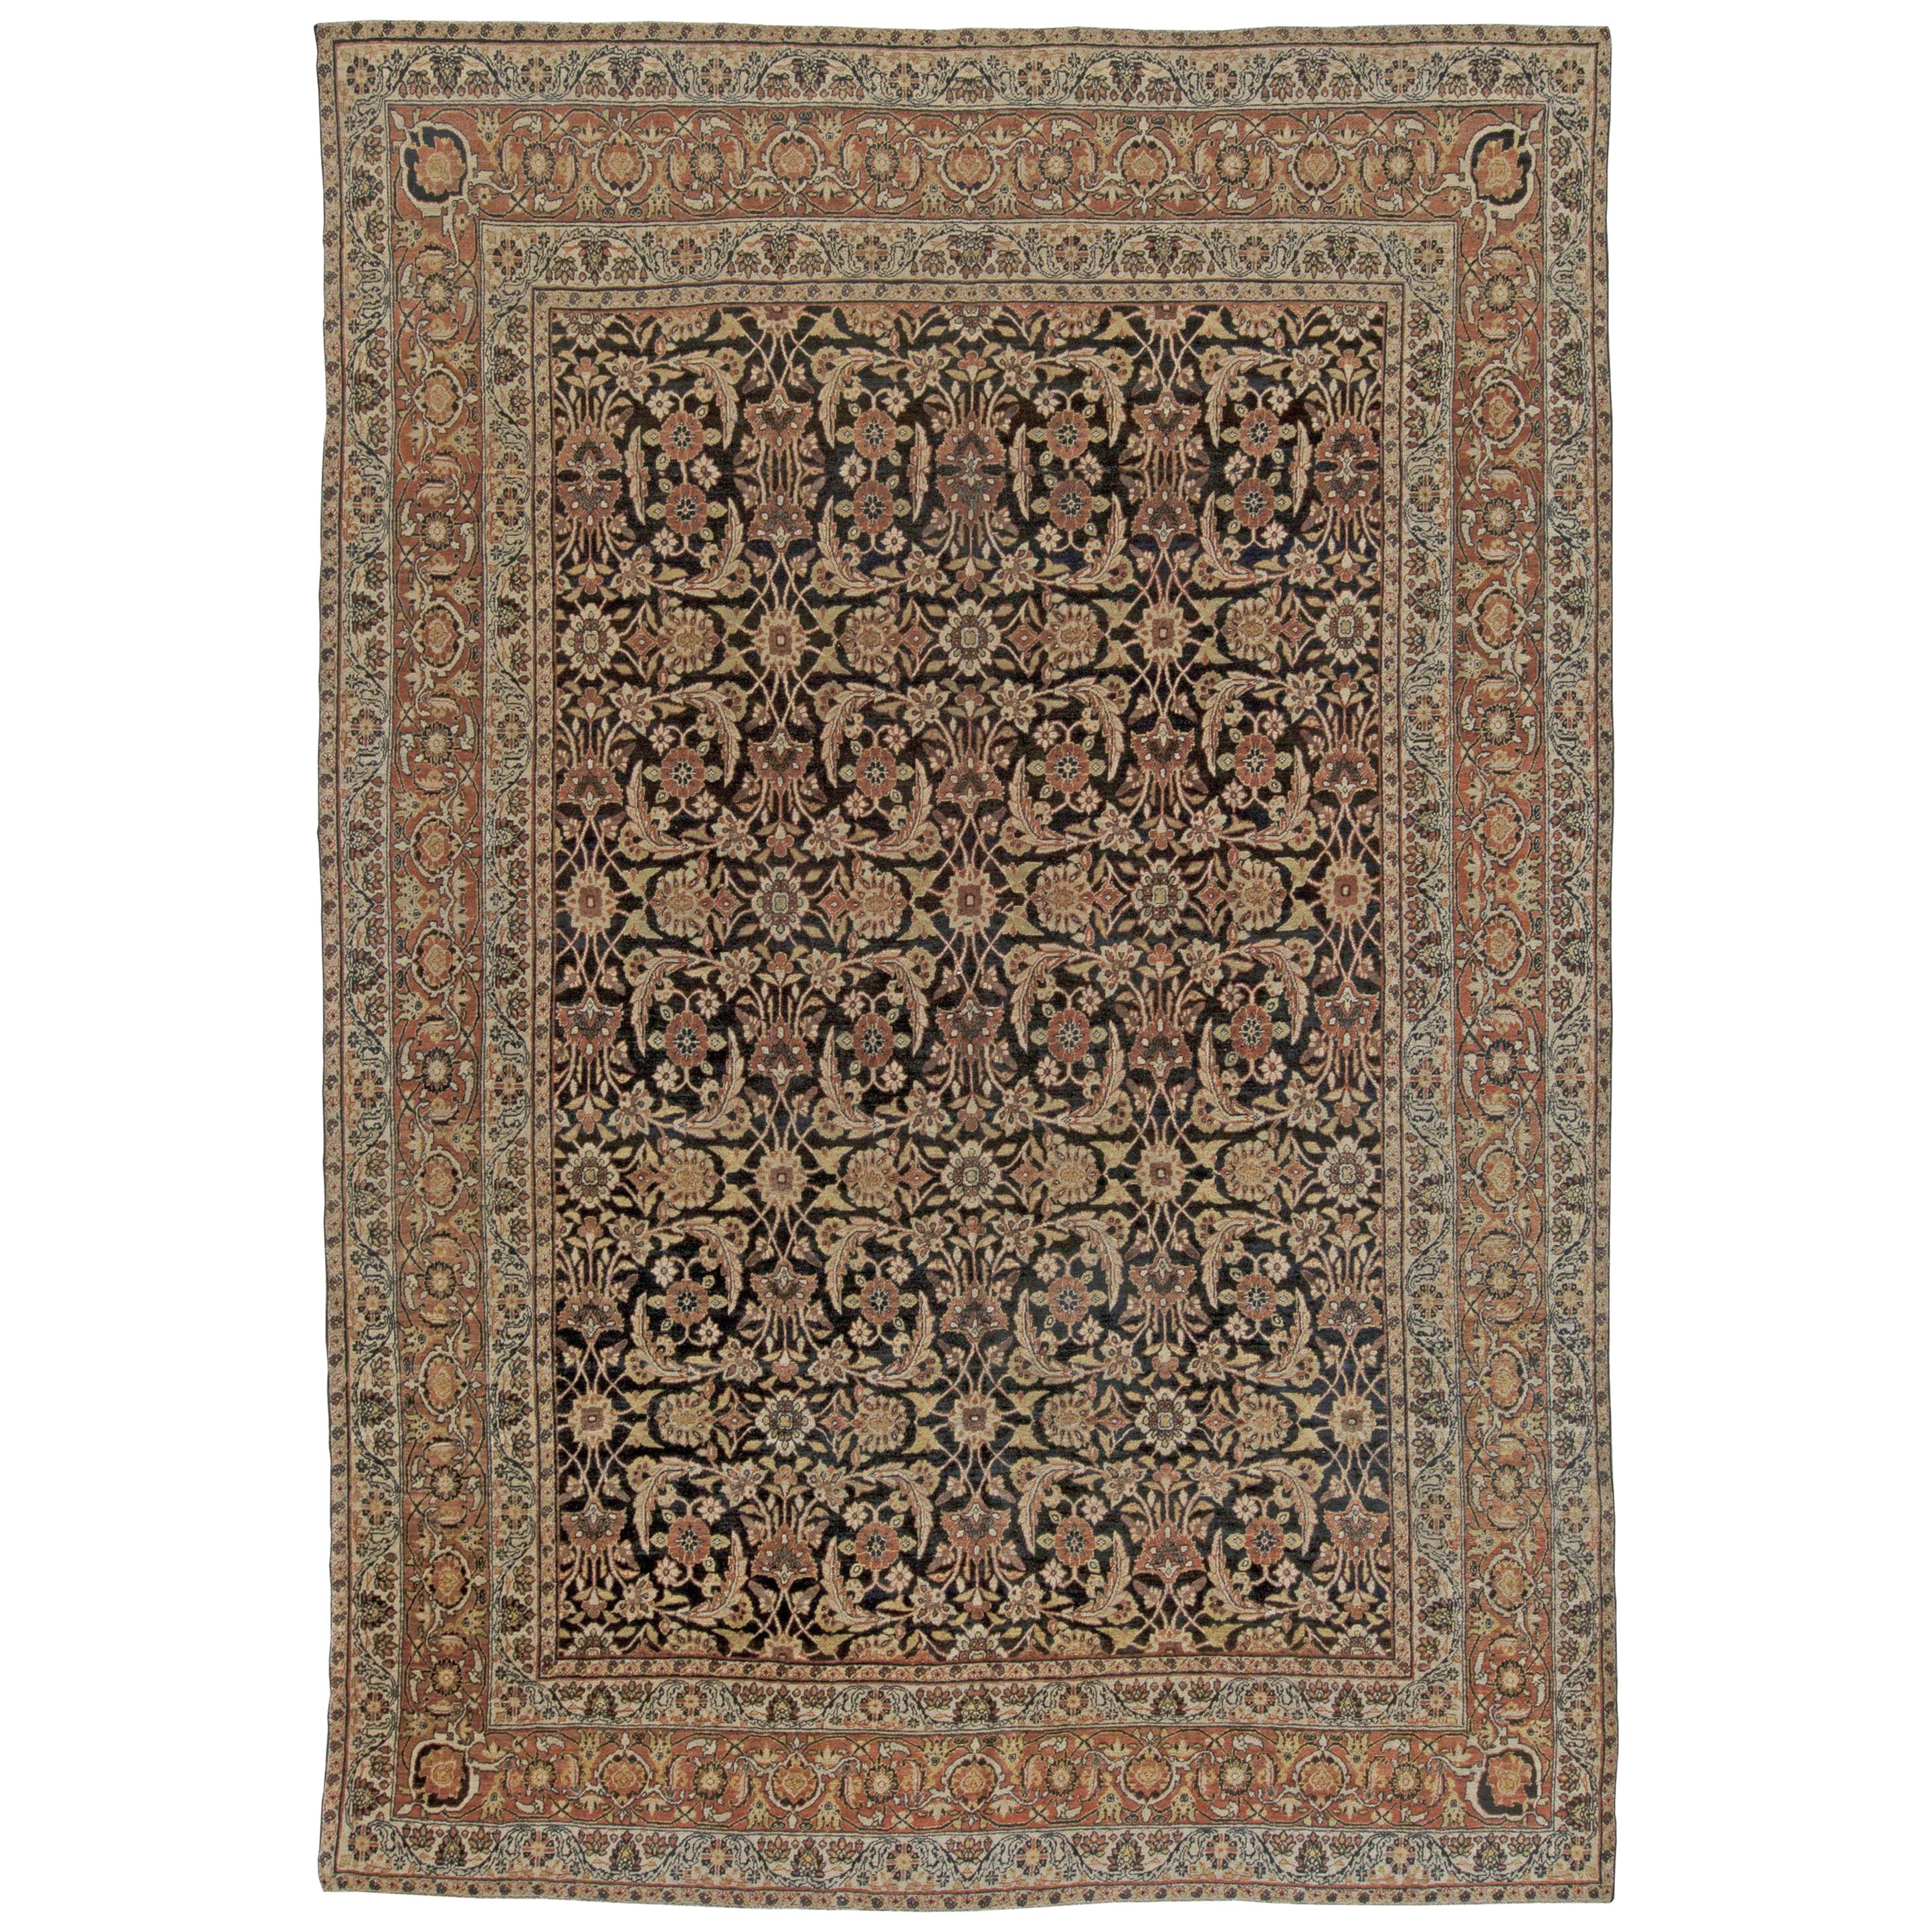 Persischer Botanischer Kirman-Teppich aus dem 19.